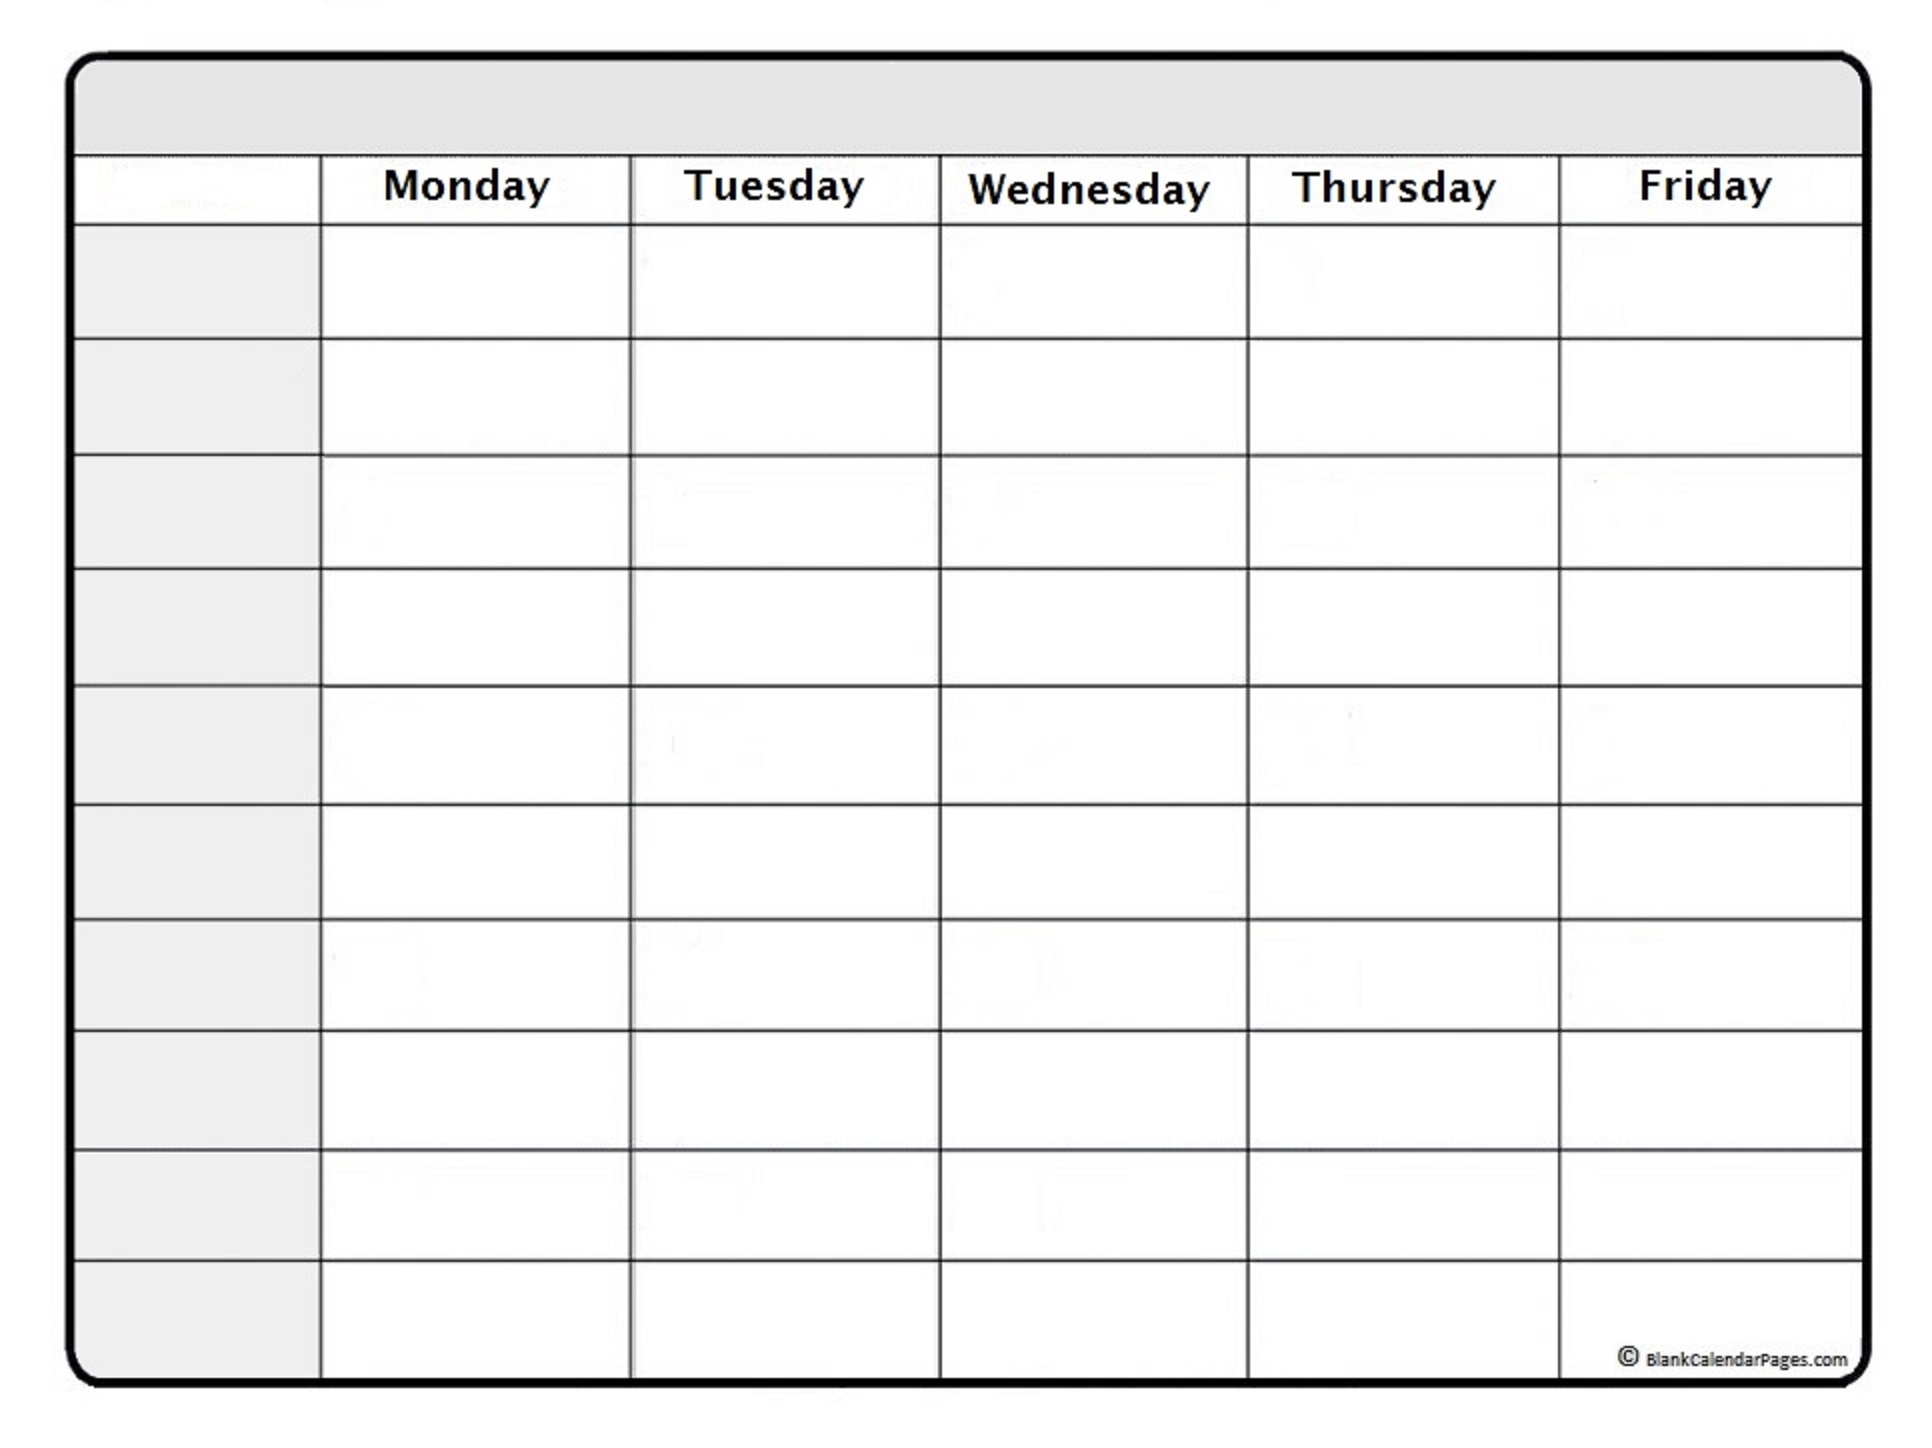 May 2019 Weekly Calendar | May 2019 Weekly Calendar Template with regard to Printable Blank Weekly Calendar With Times